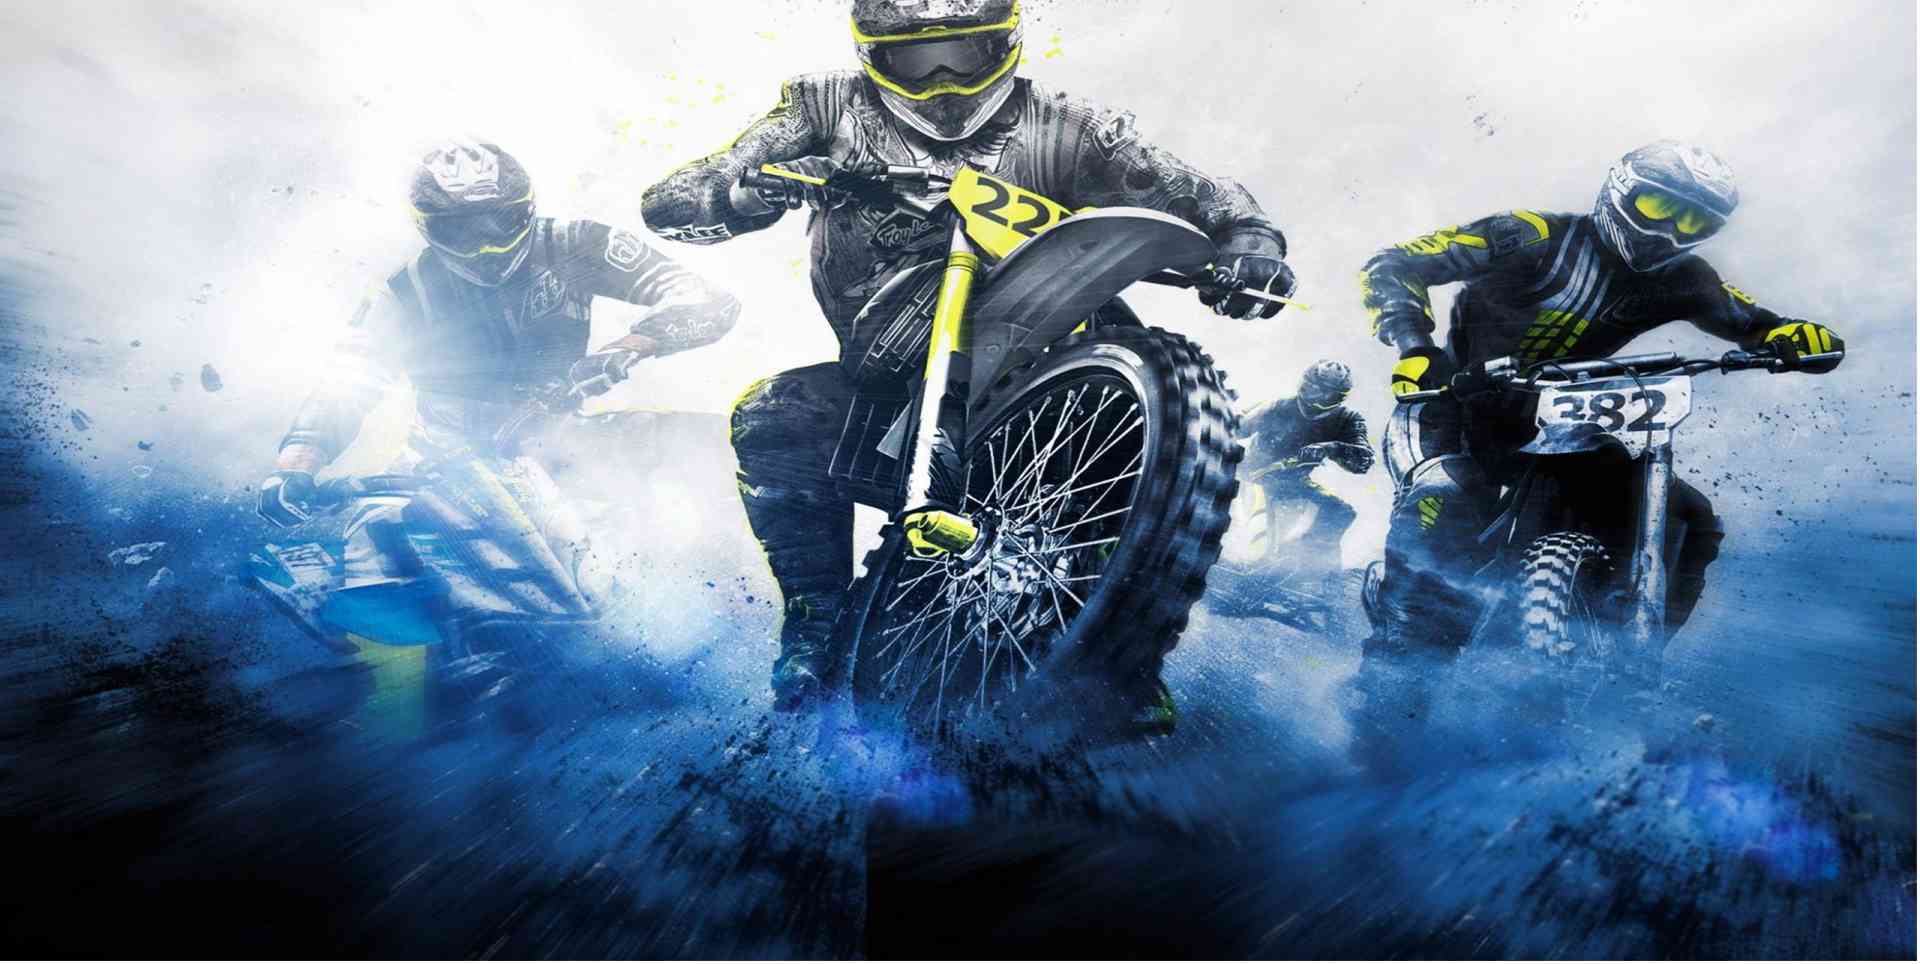 MXGP Of Latvia Live Stream And AMA Motocross